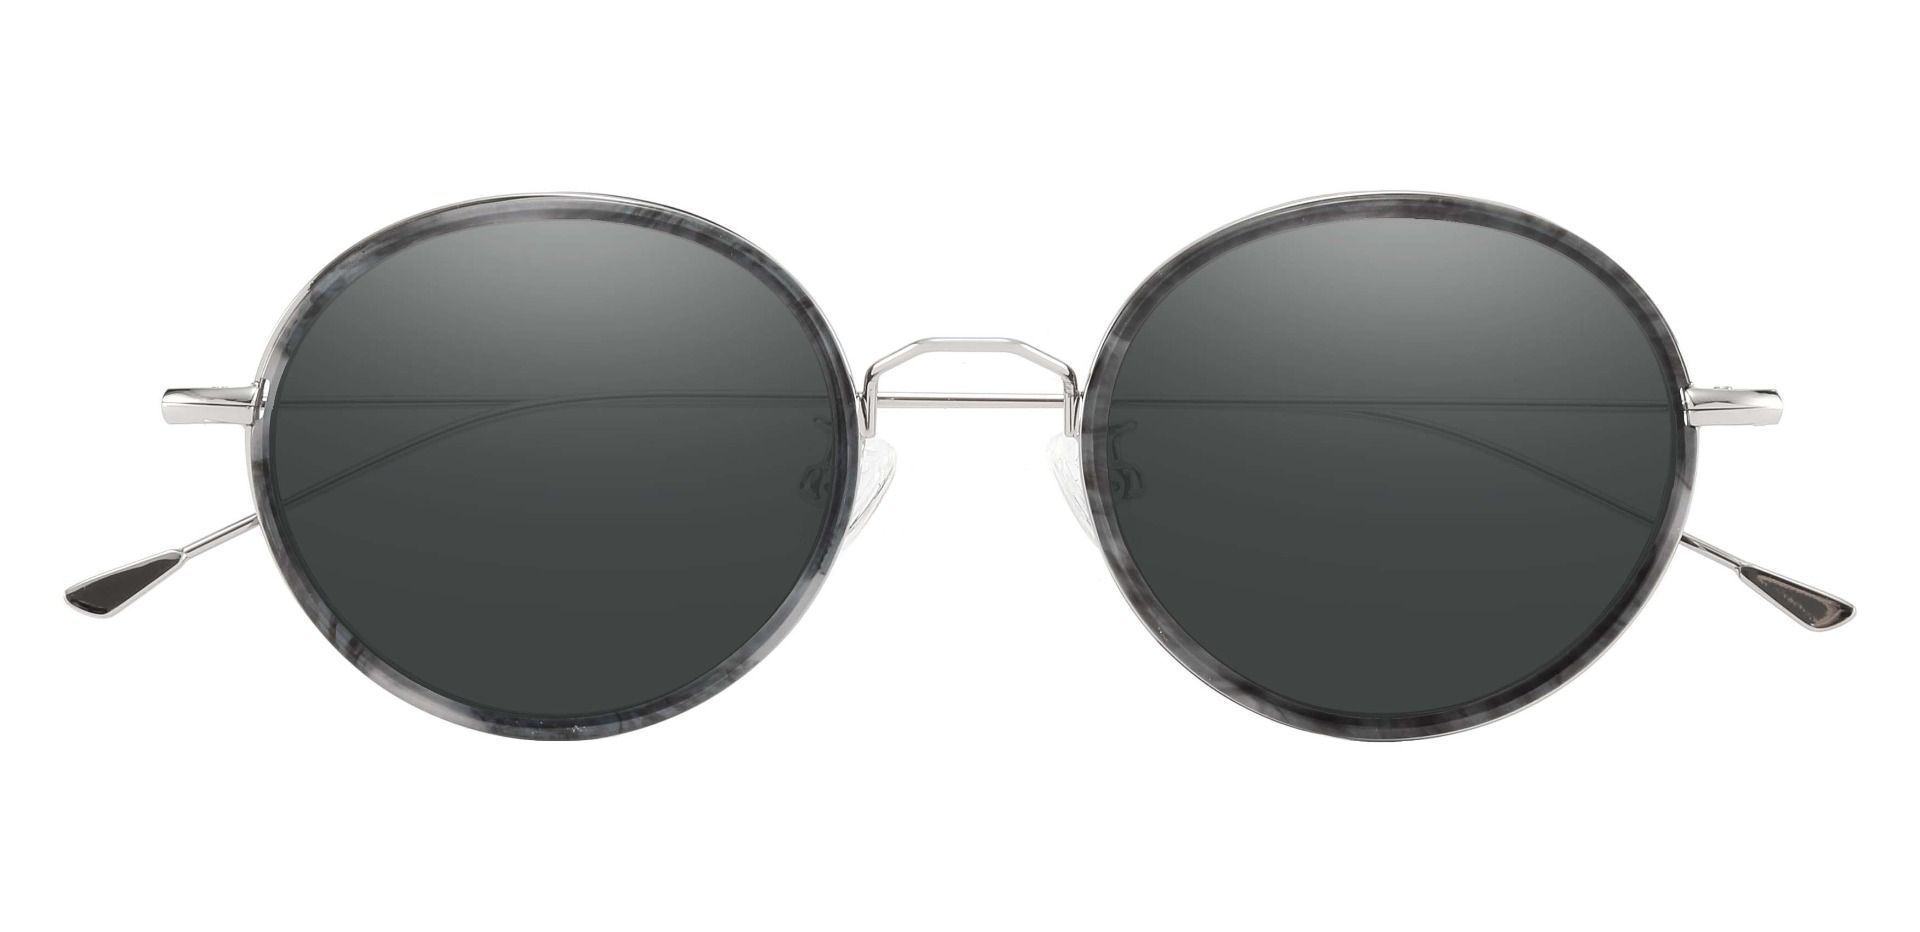 Malverne Oval Progressive Sunglasses - Gray Frame With Gray Lenses